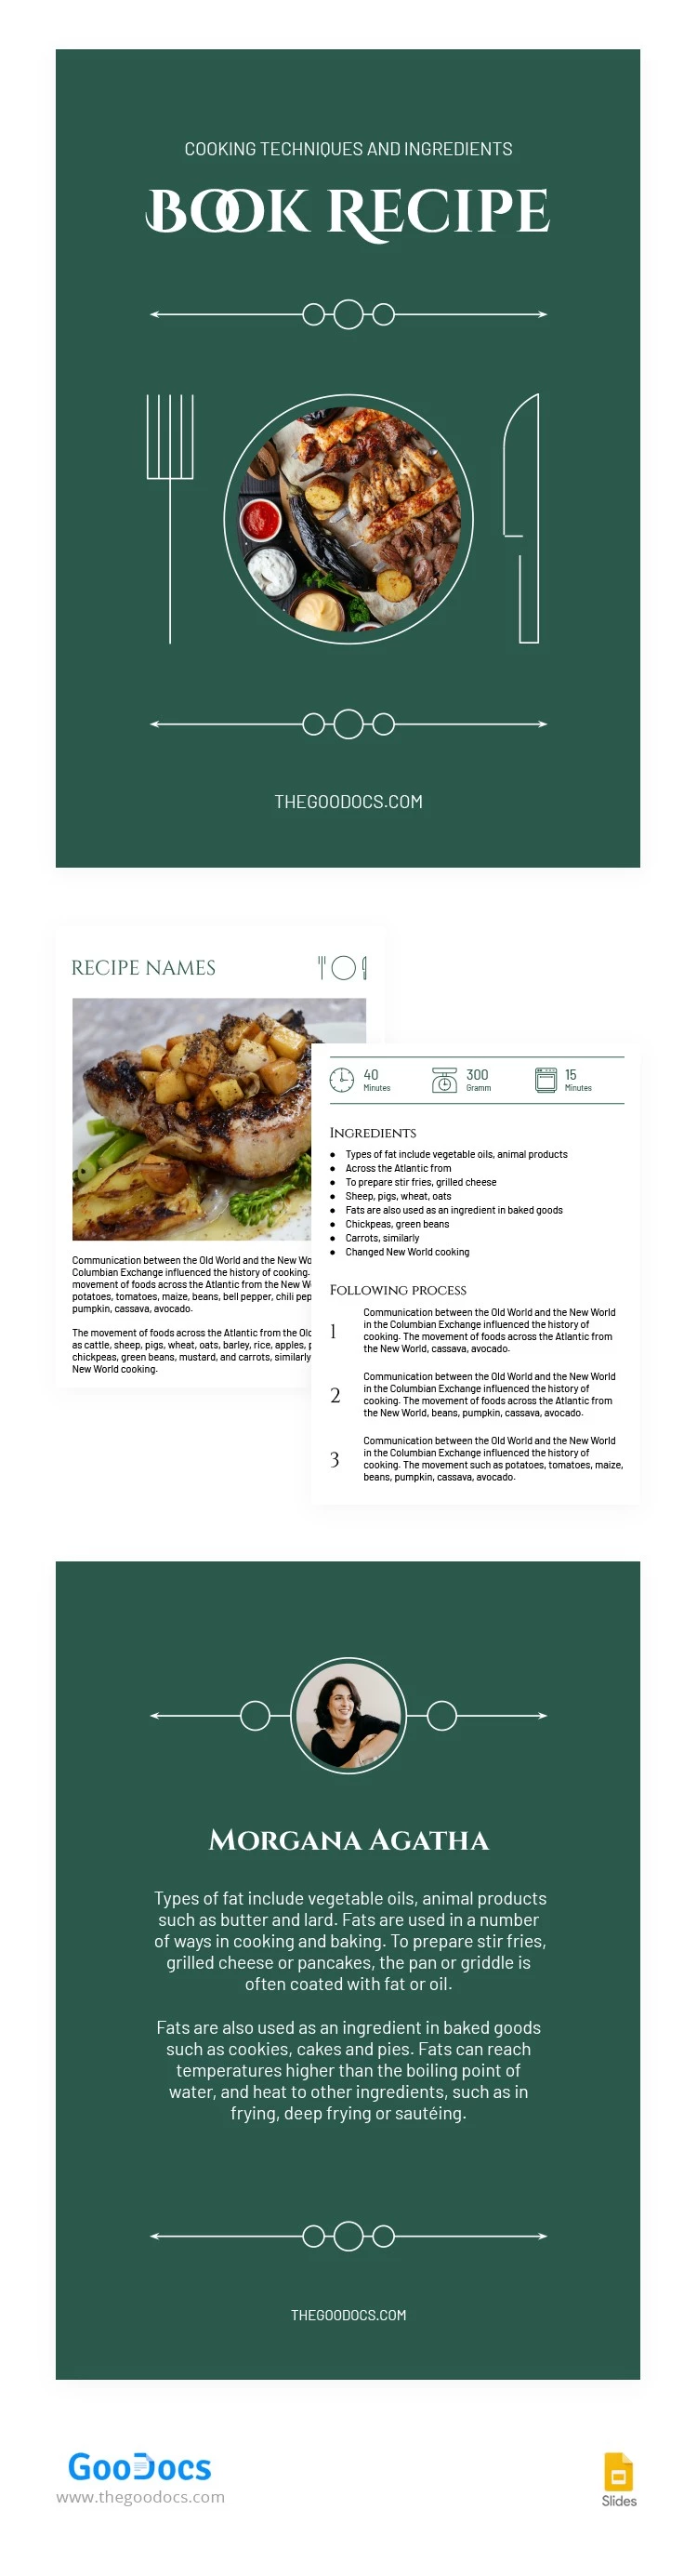 Green Elegant Book Recipe - free Google Docs Template - 10065091